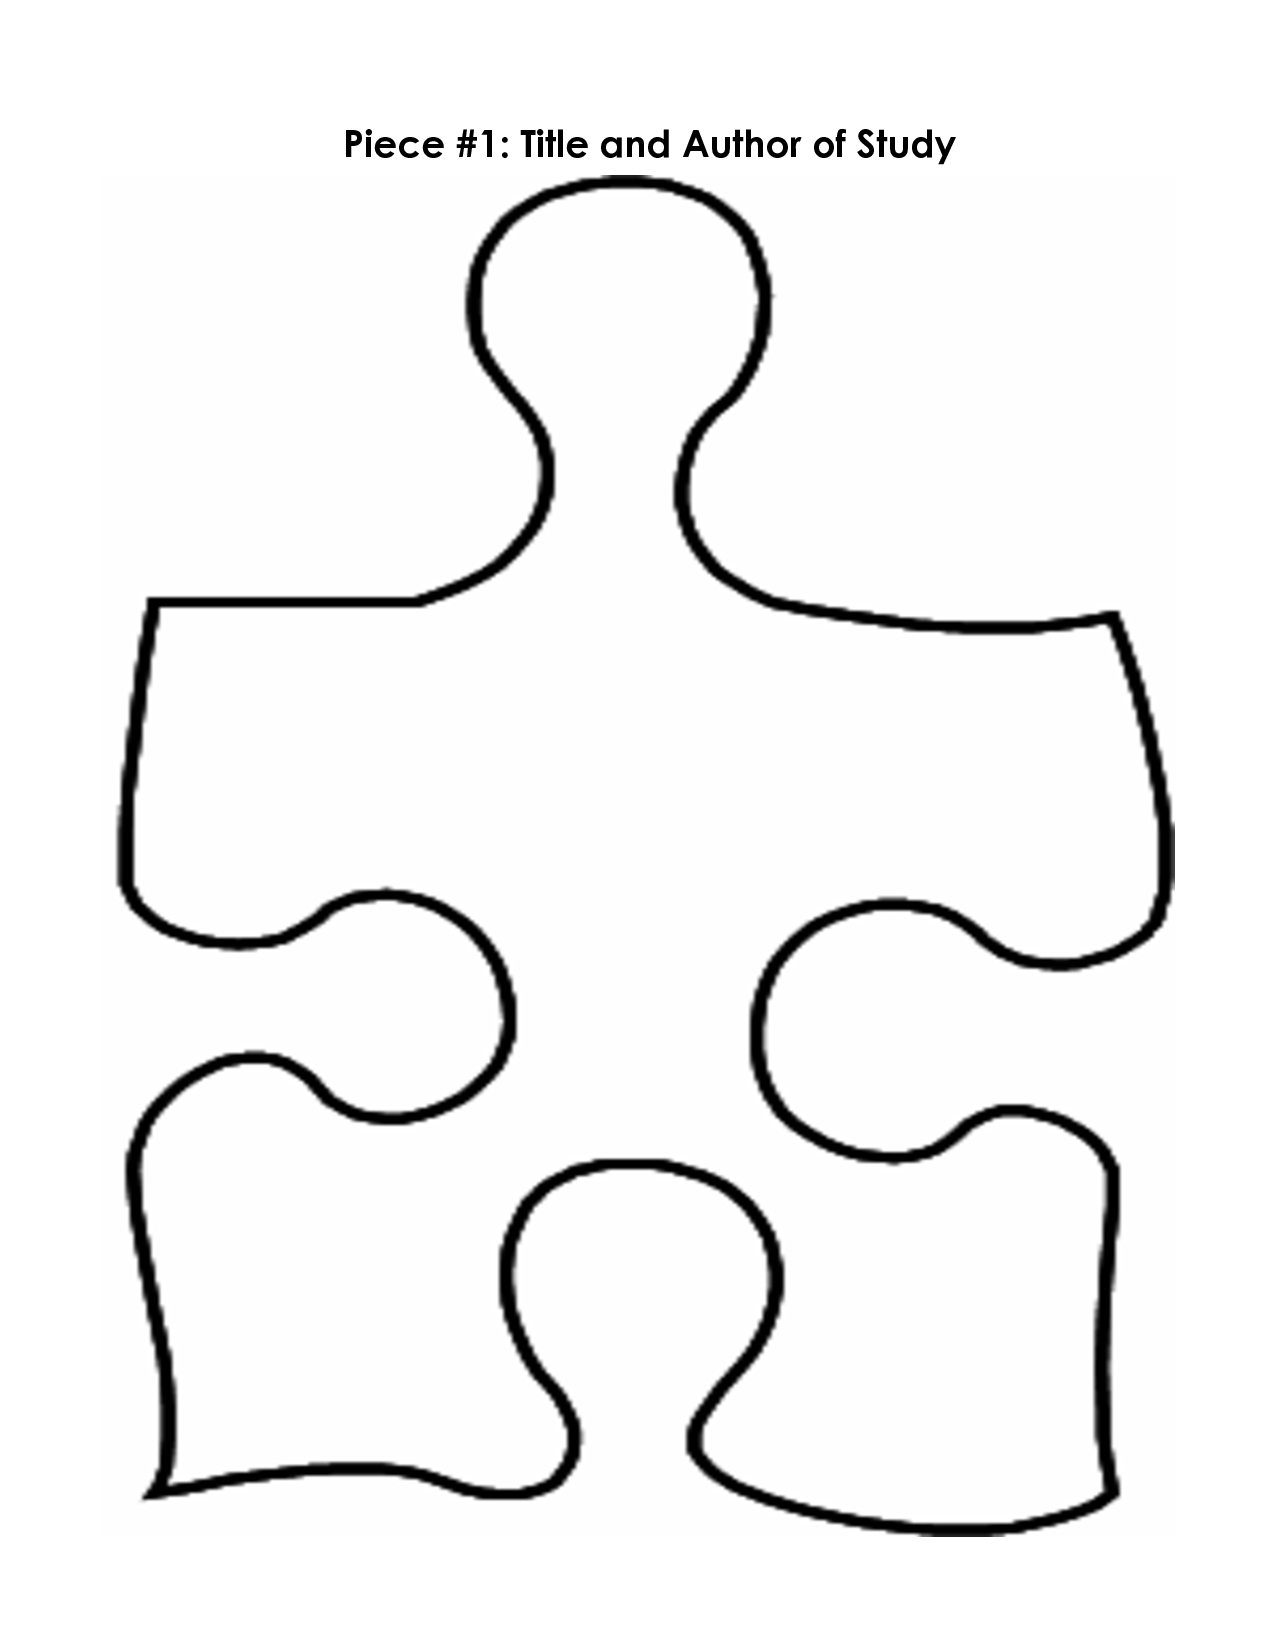 Puzzle piece template clipart